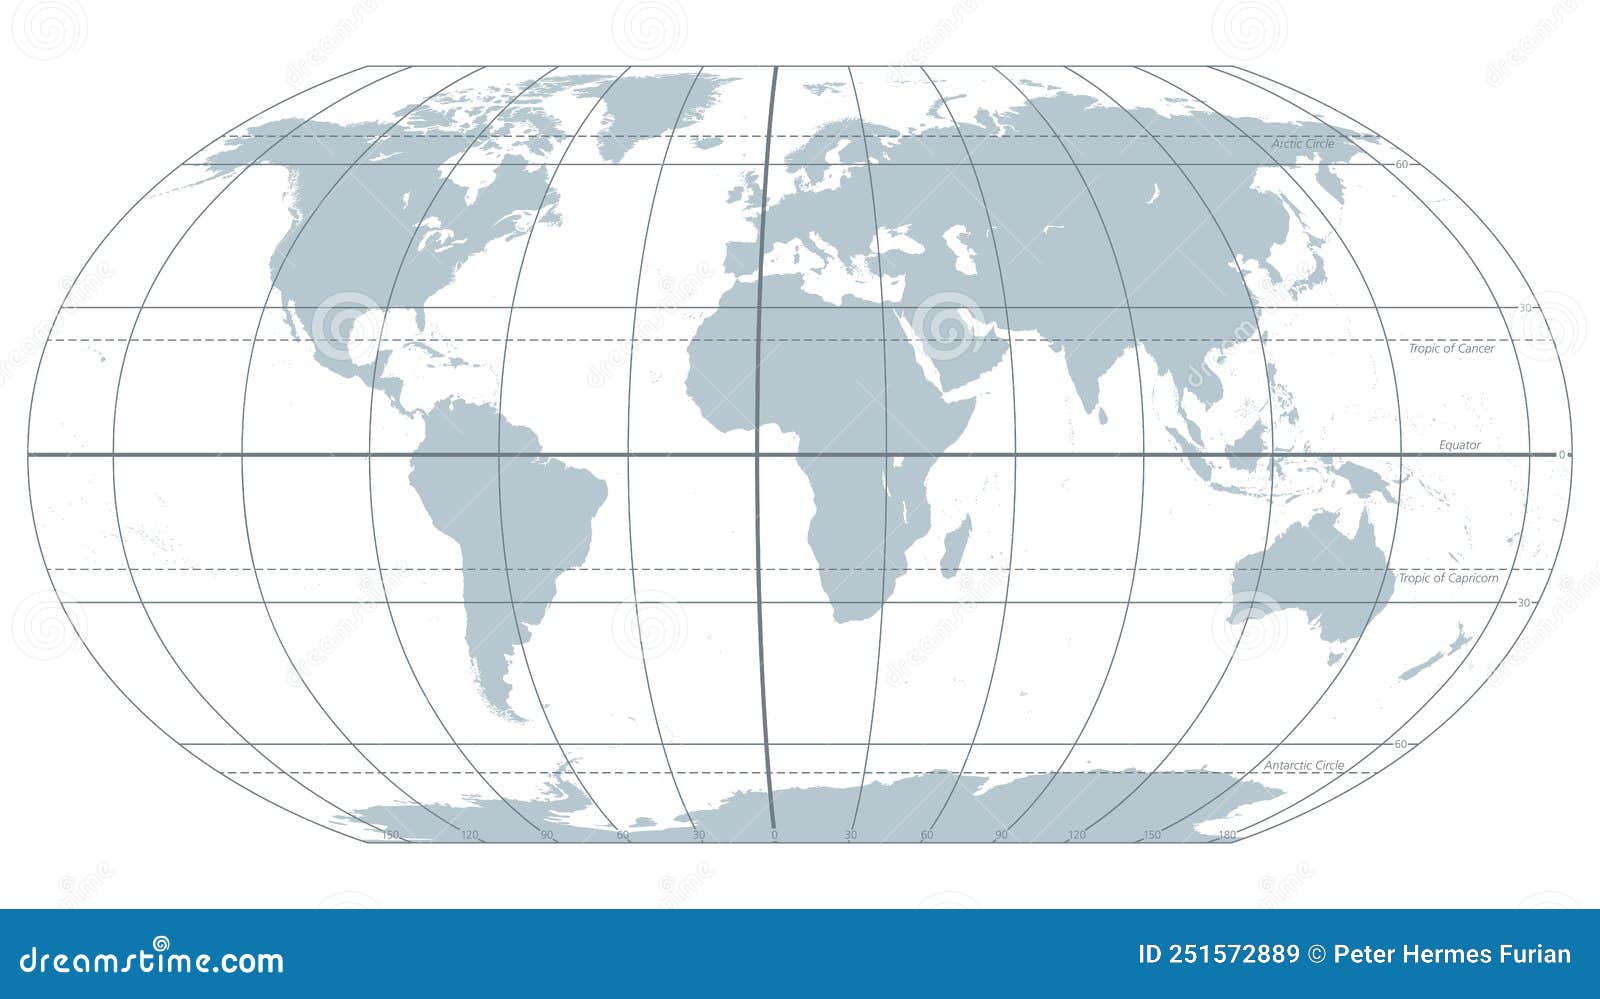 world most important circles of latitudes and longitudes, gray map